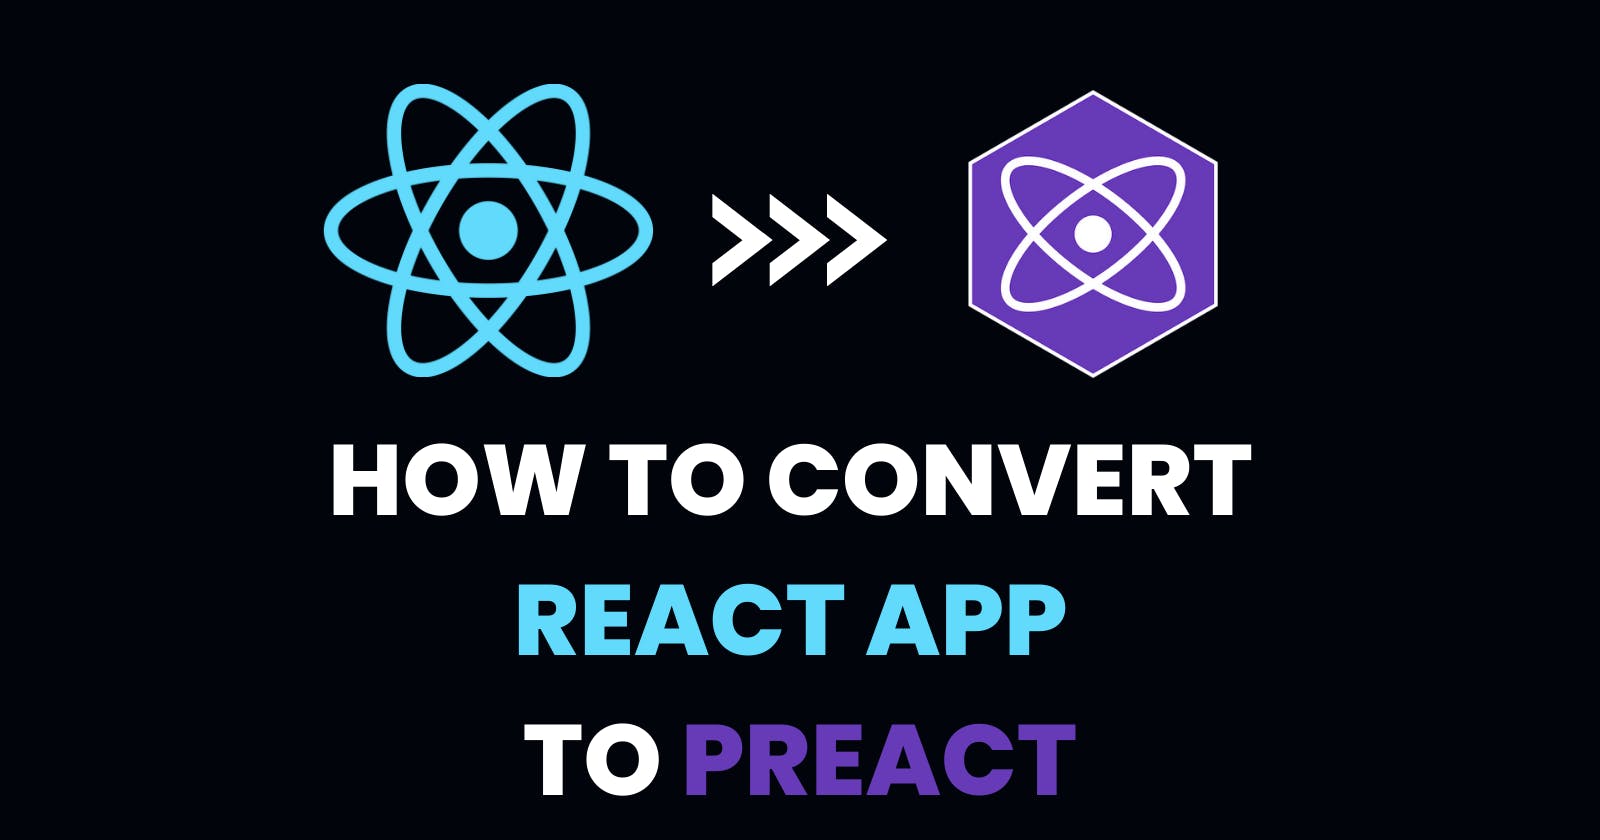 How to Convert React App to Preact